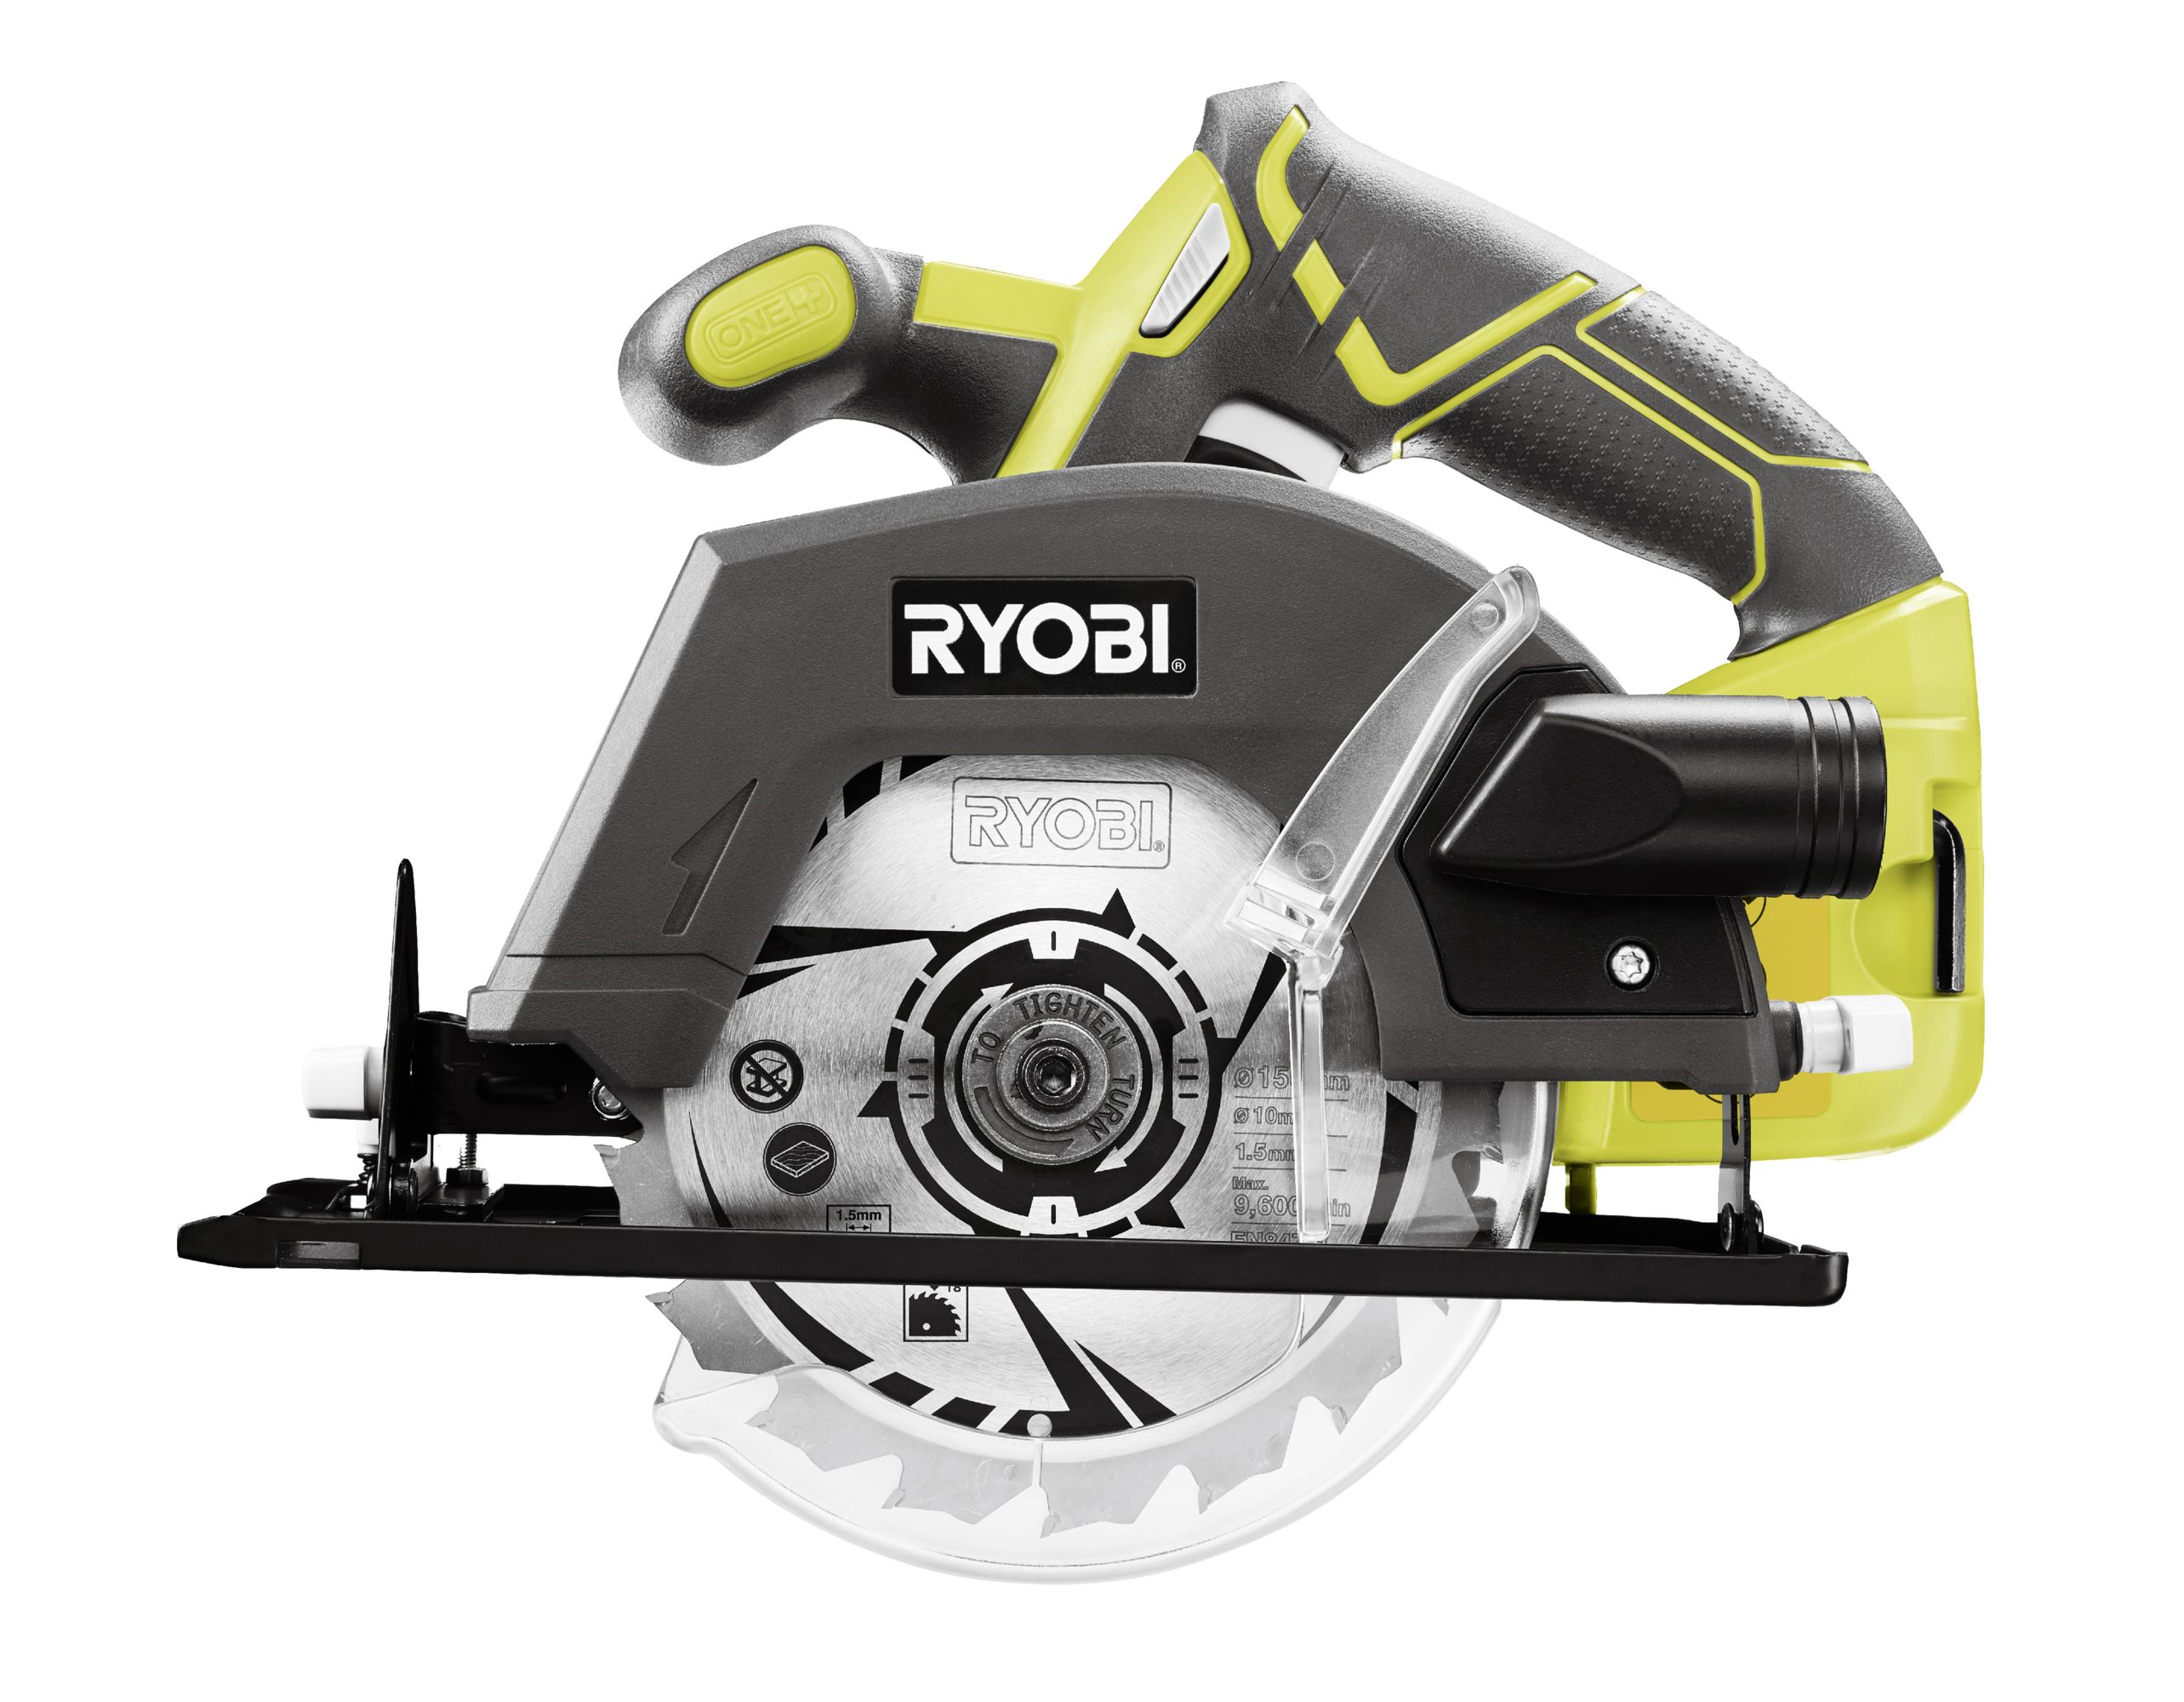 Ryobi ONE+ 18V 150mm Cordless Circular saw R18CSP - Bare unit